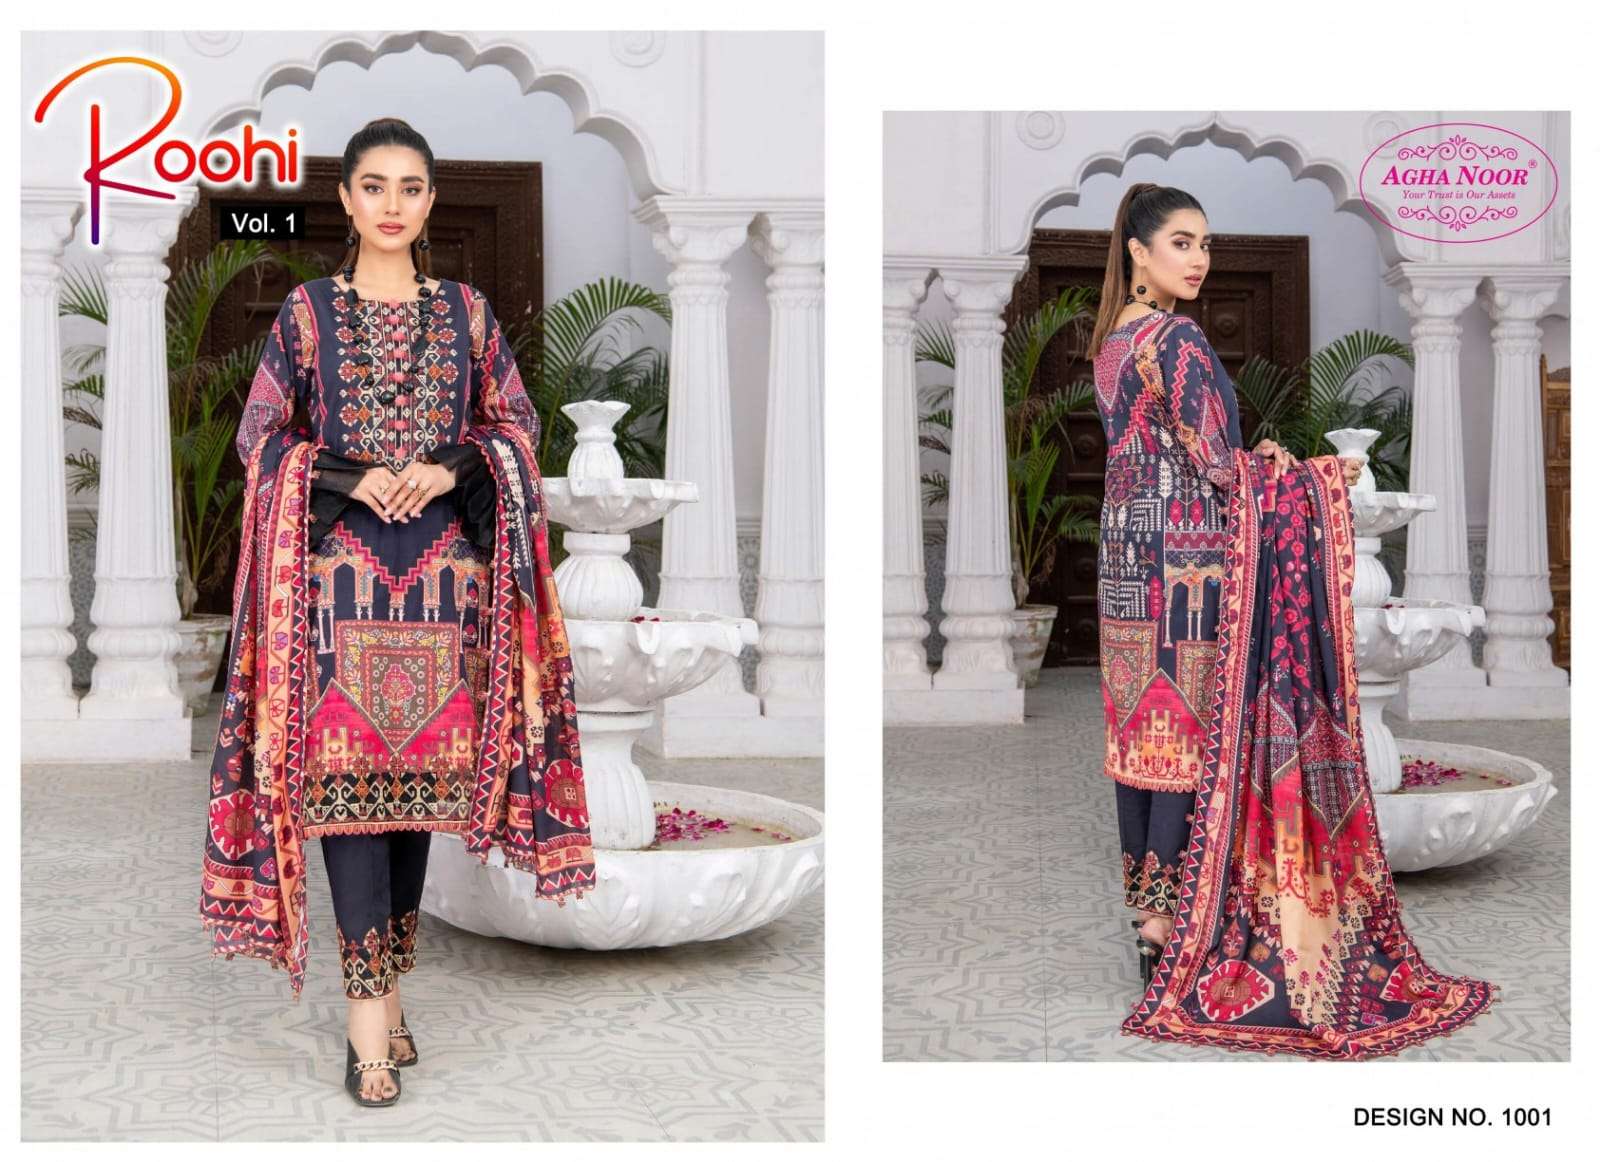 agha noor roohi vol-1 pure lawn cotton designer pakistani suits dress material new catalogue surat 